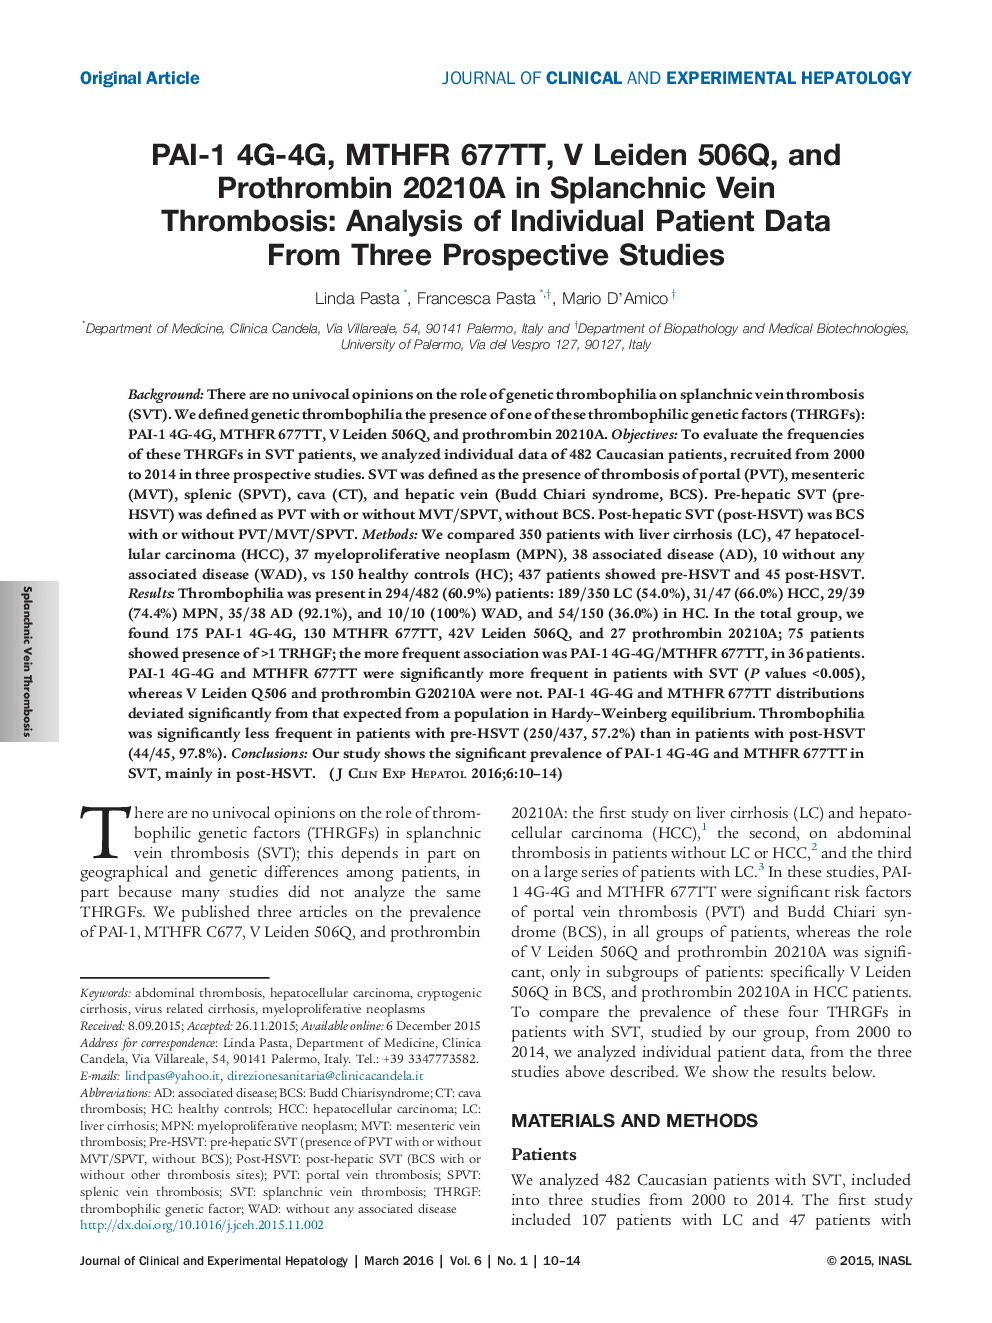 PAI-1 4G-4G, MTHFR 677TT, V Leiden 506Q, and Prothrombin 20210A in Splanchnic Vein Thrombosis: Analysis of Individual Patient Data From Three Prospective Studies